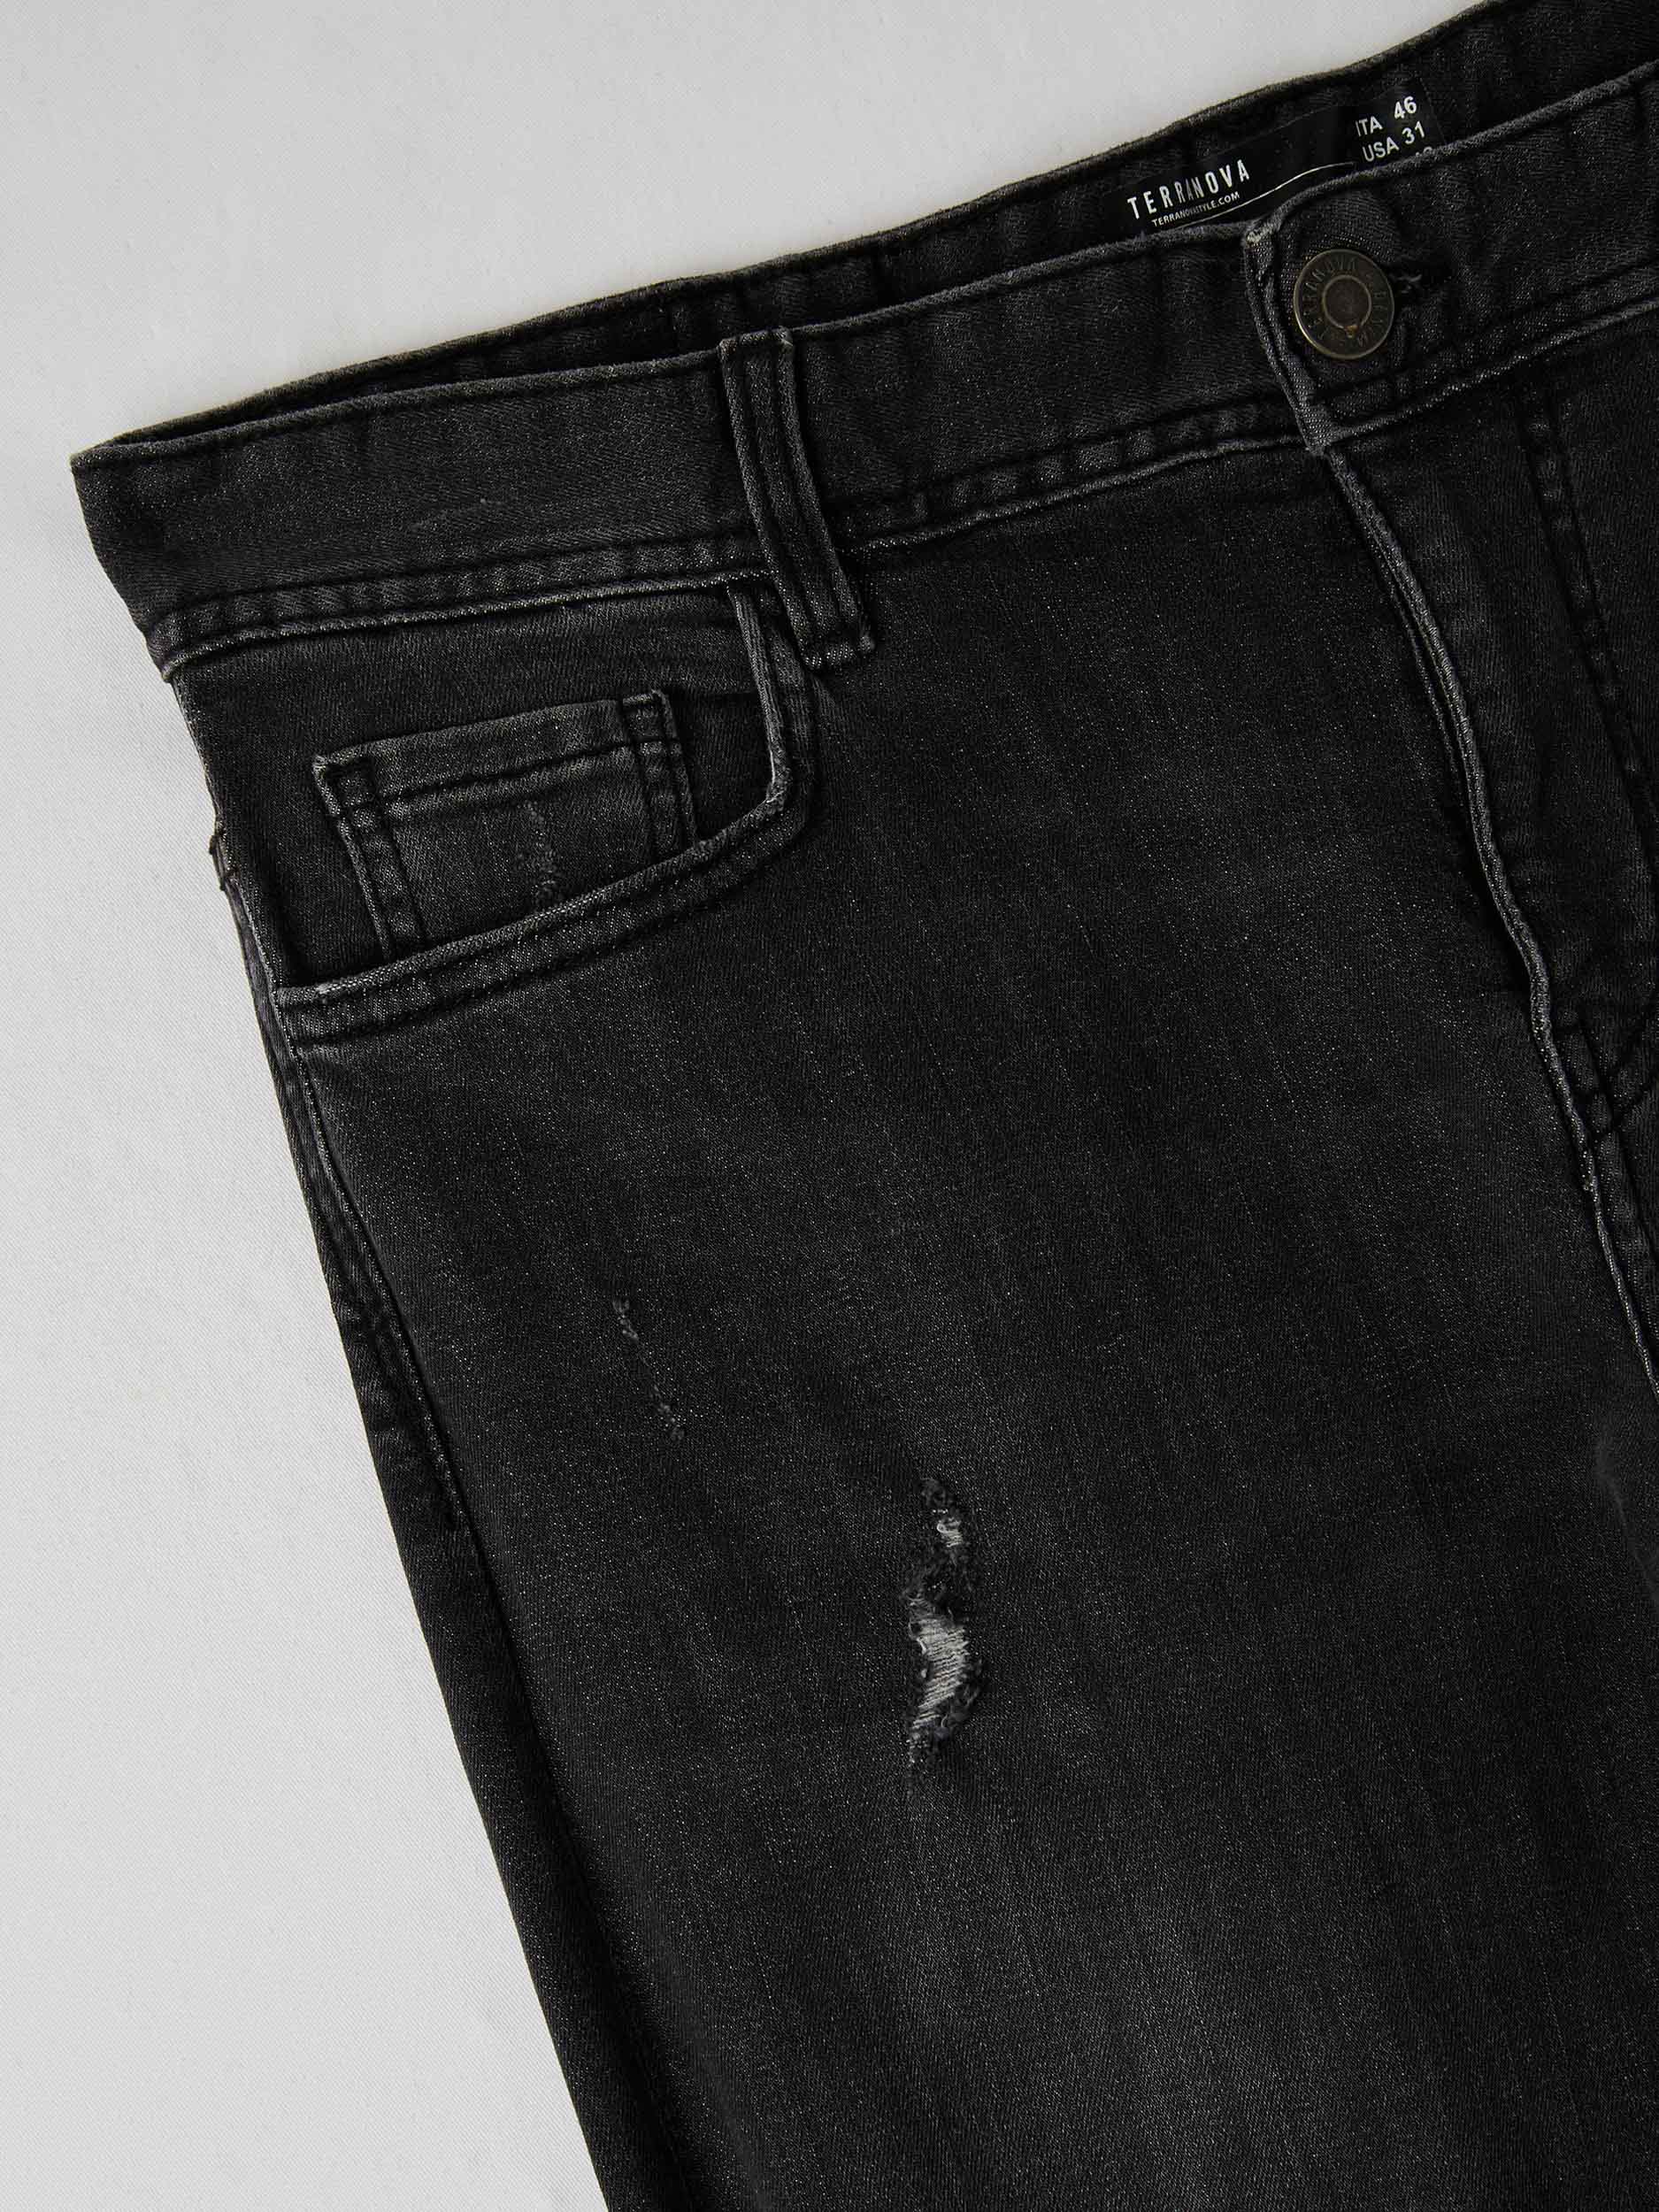 denim black ripped jeans